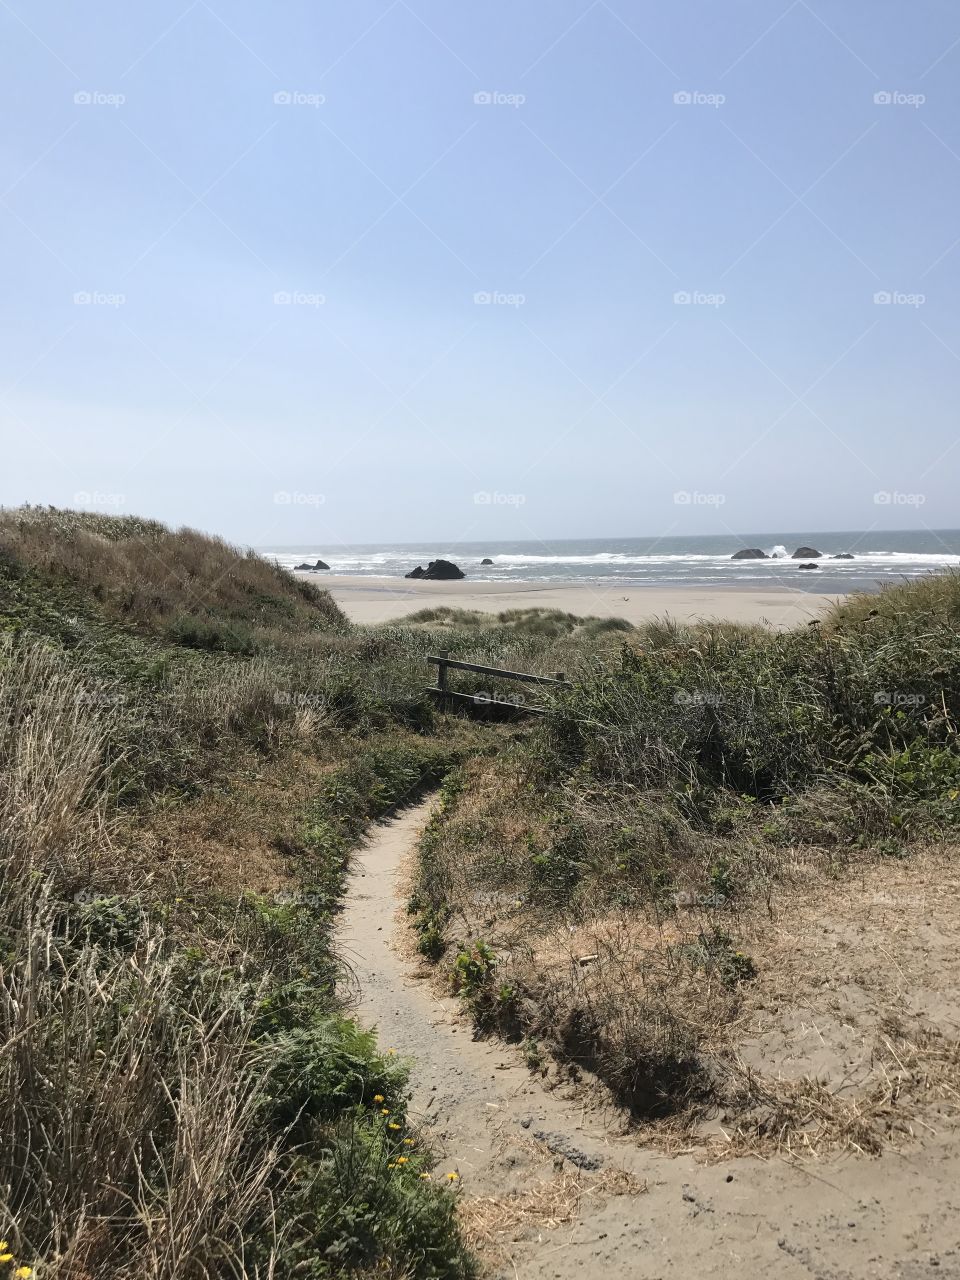 Pathway through dunes to beach